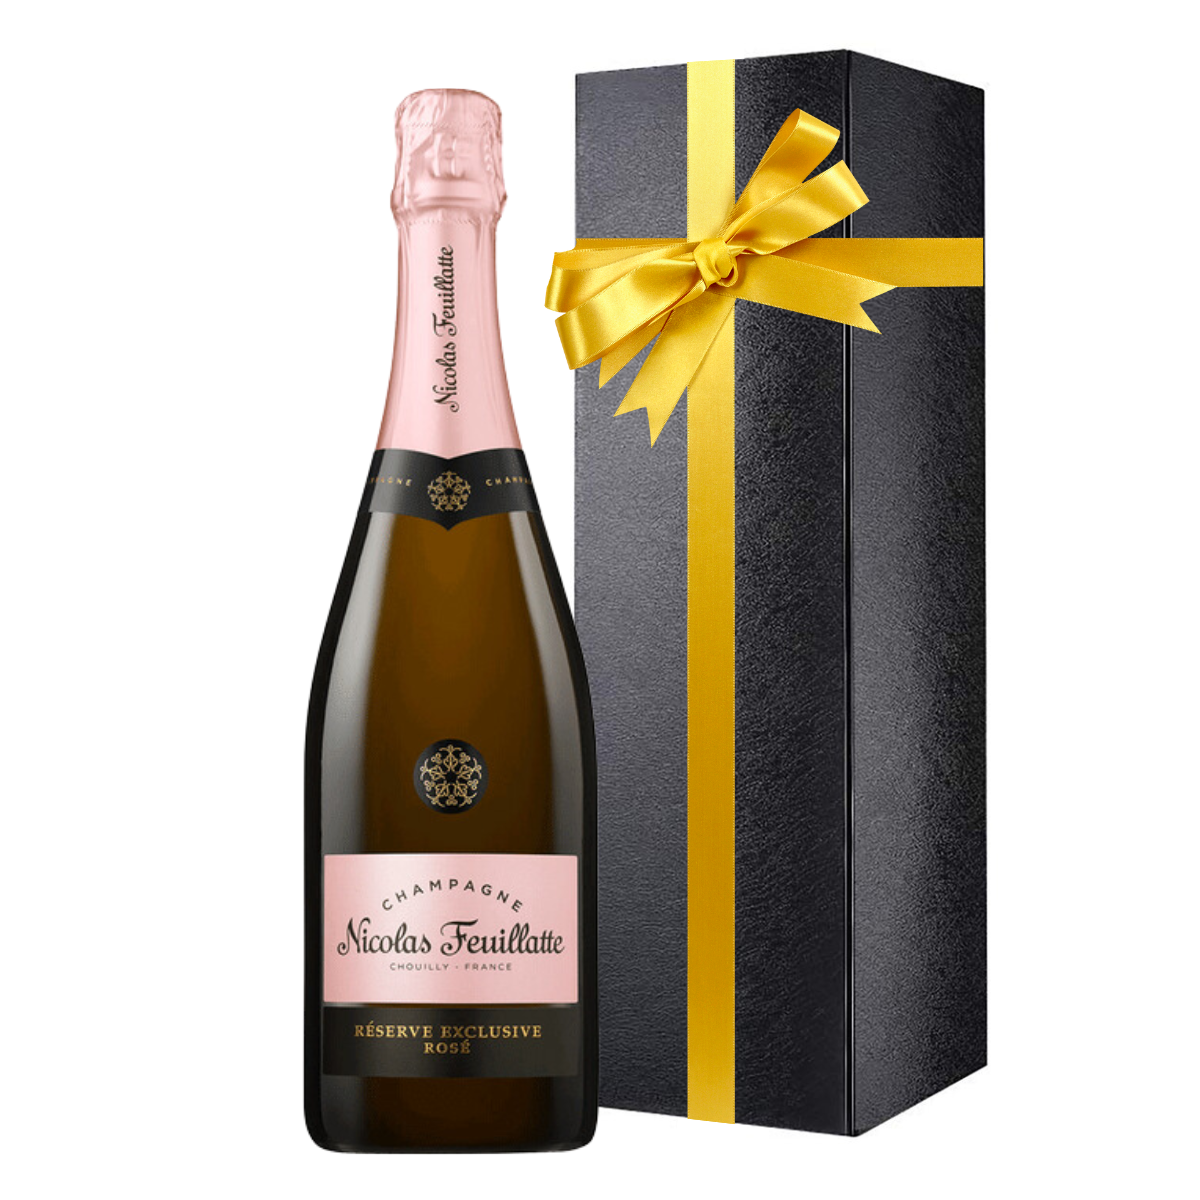 Champagne Nicolas Feuillatte, Reserve Exclusive Brut, wooden box